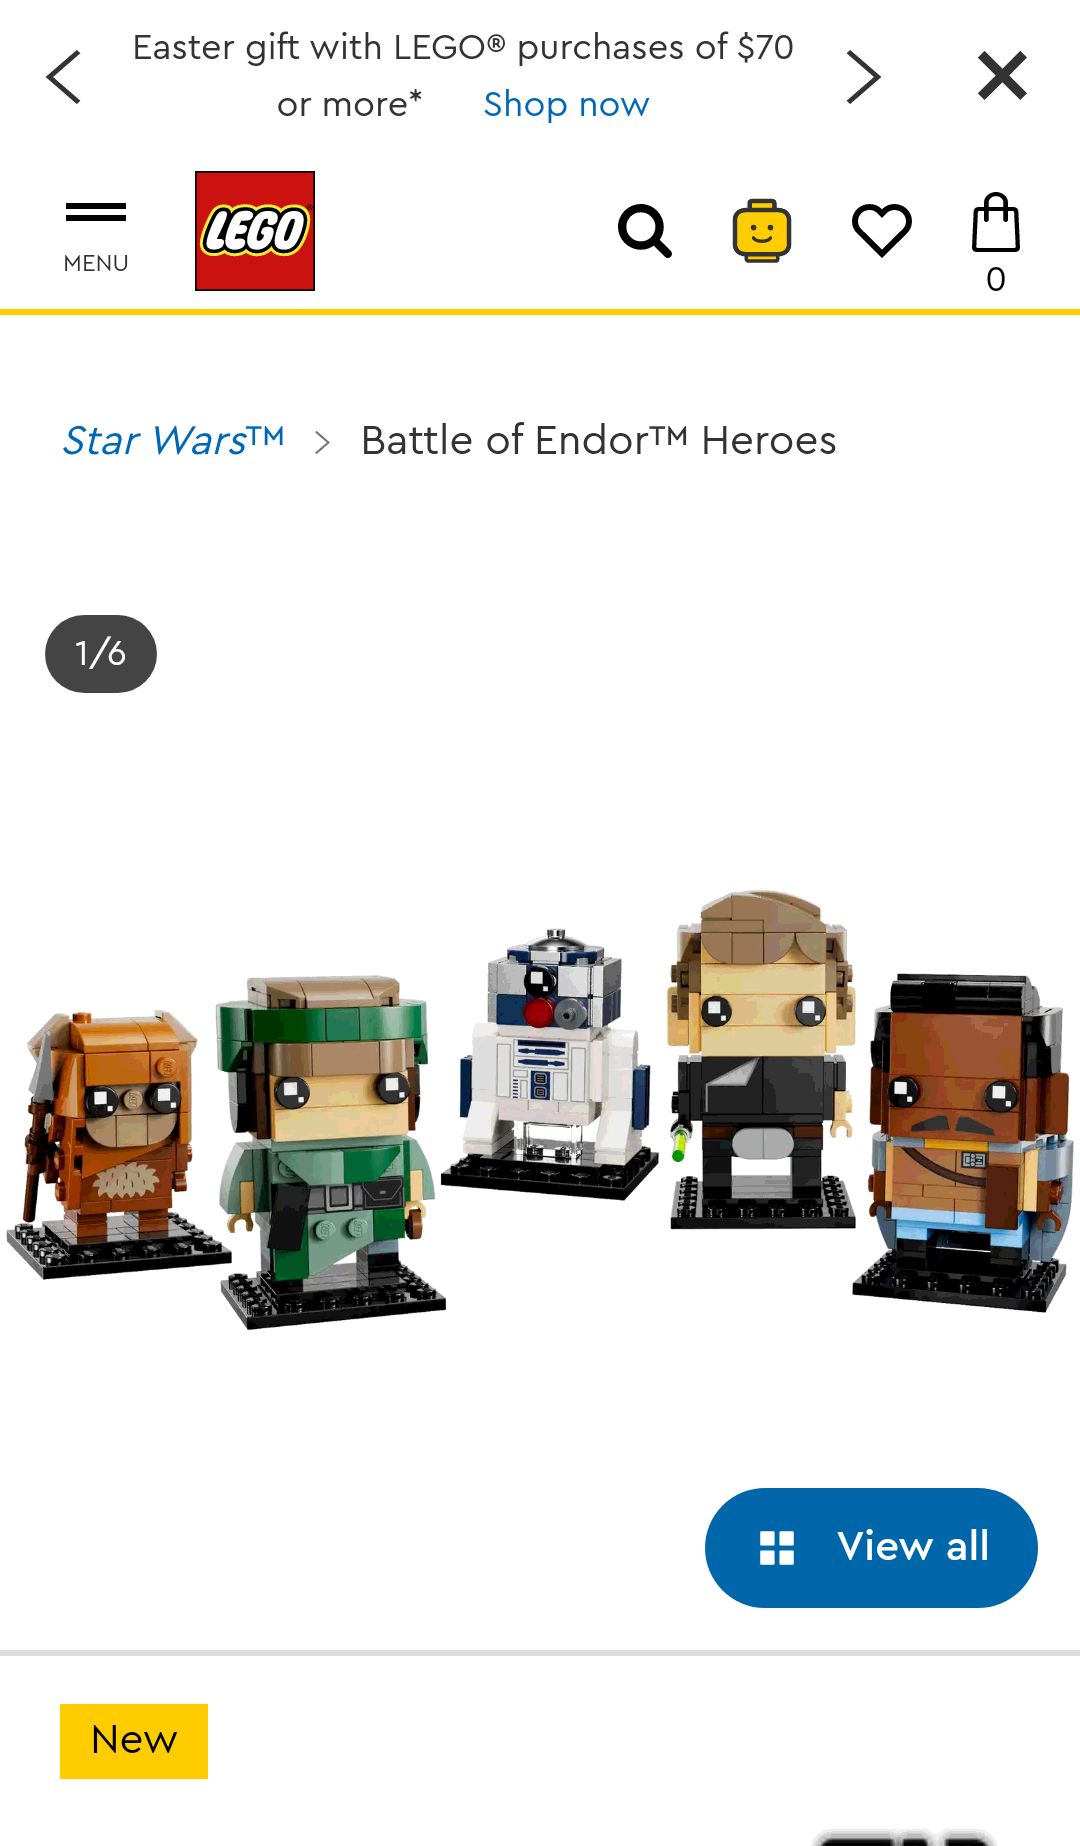 Battle of Endor™ Heroes 40623 | Star Wars™ | Buy online at the Official LEGO® Shop US